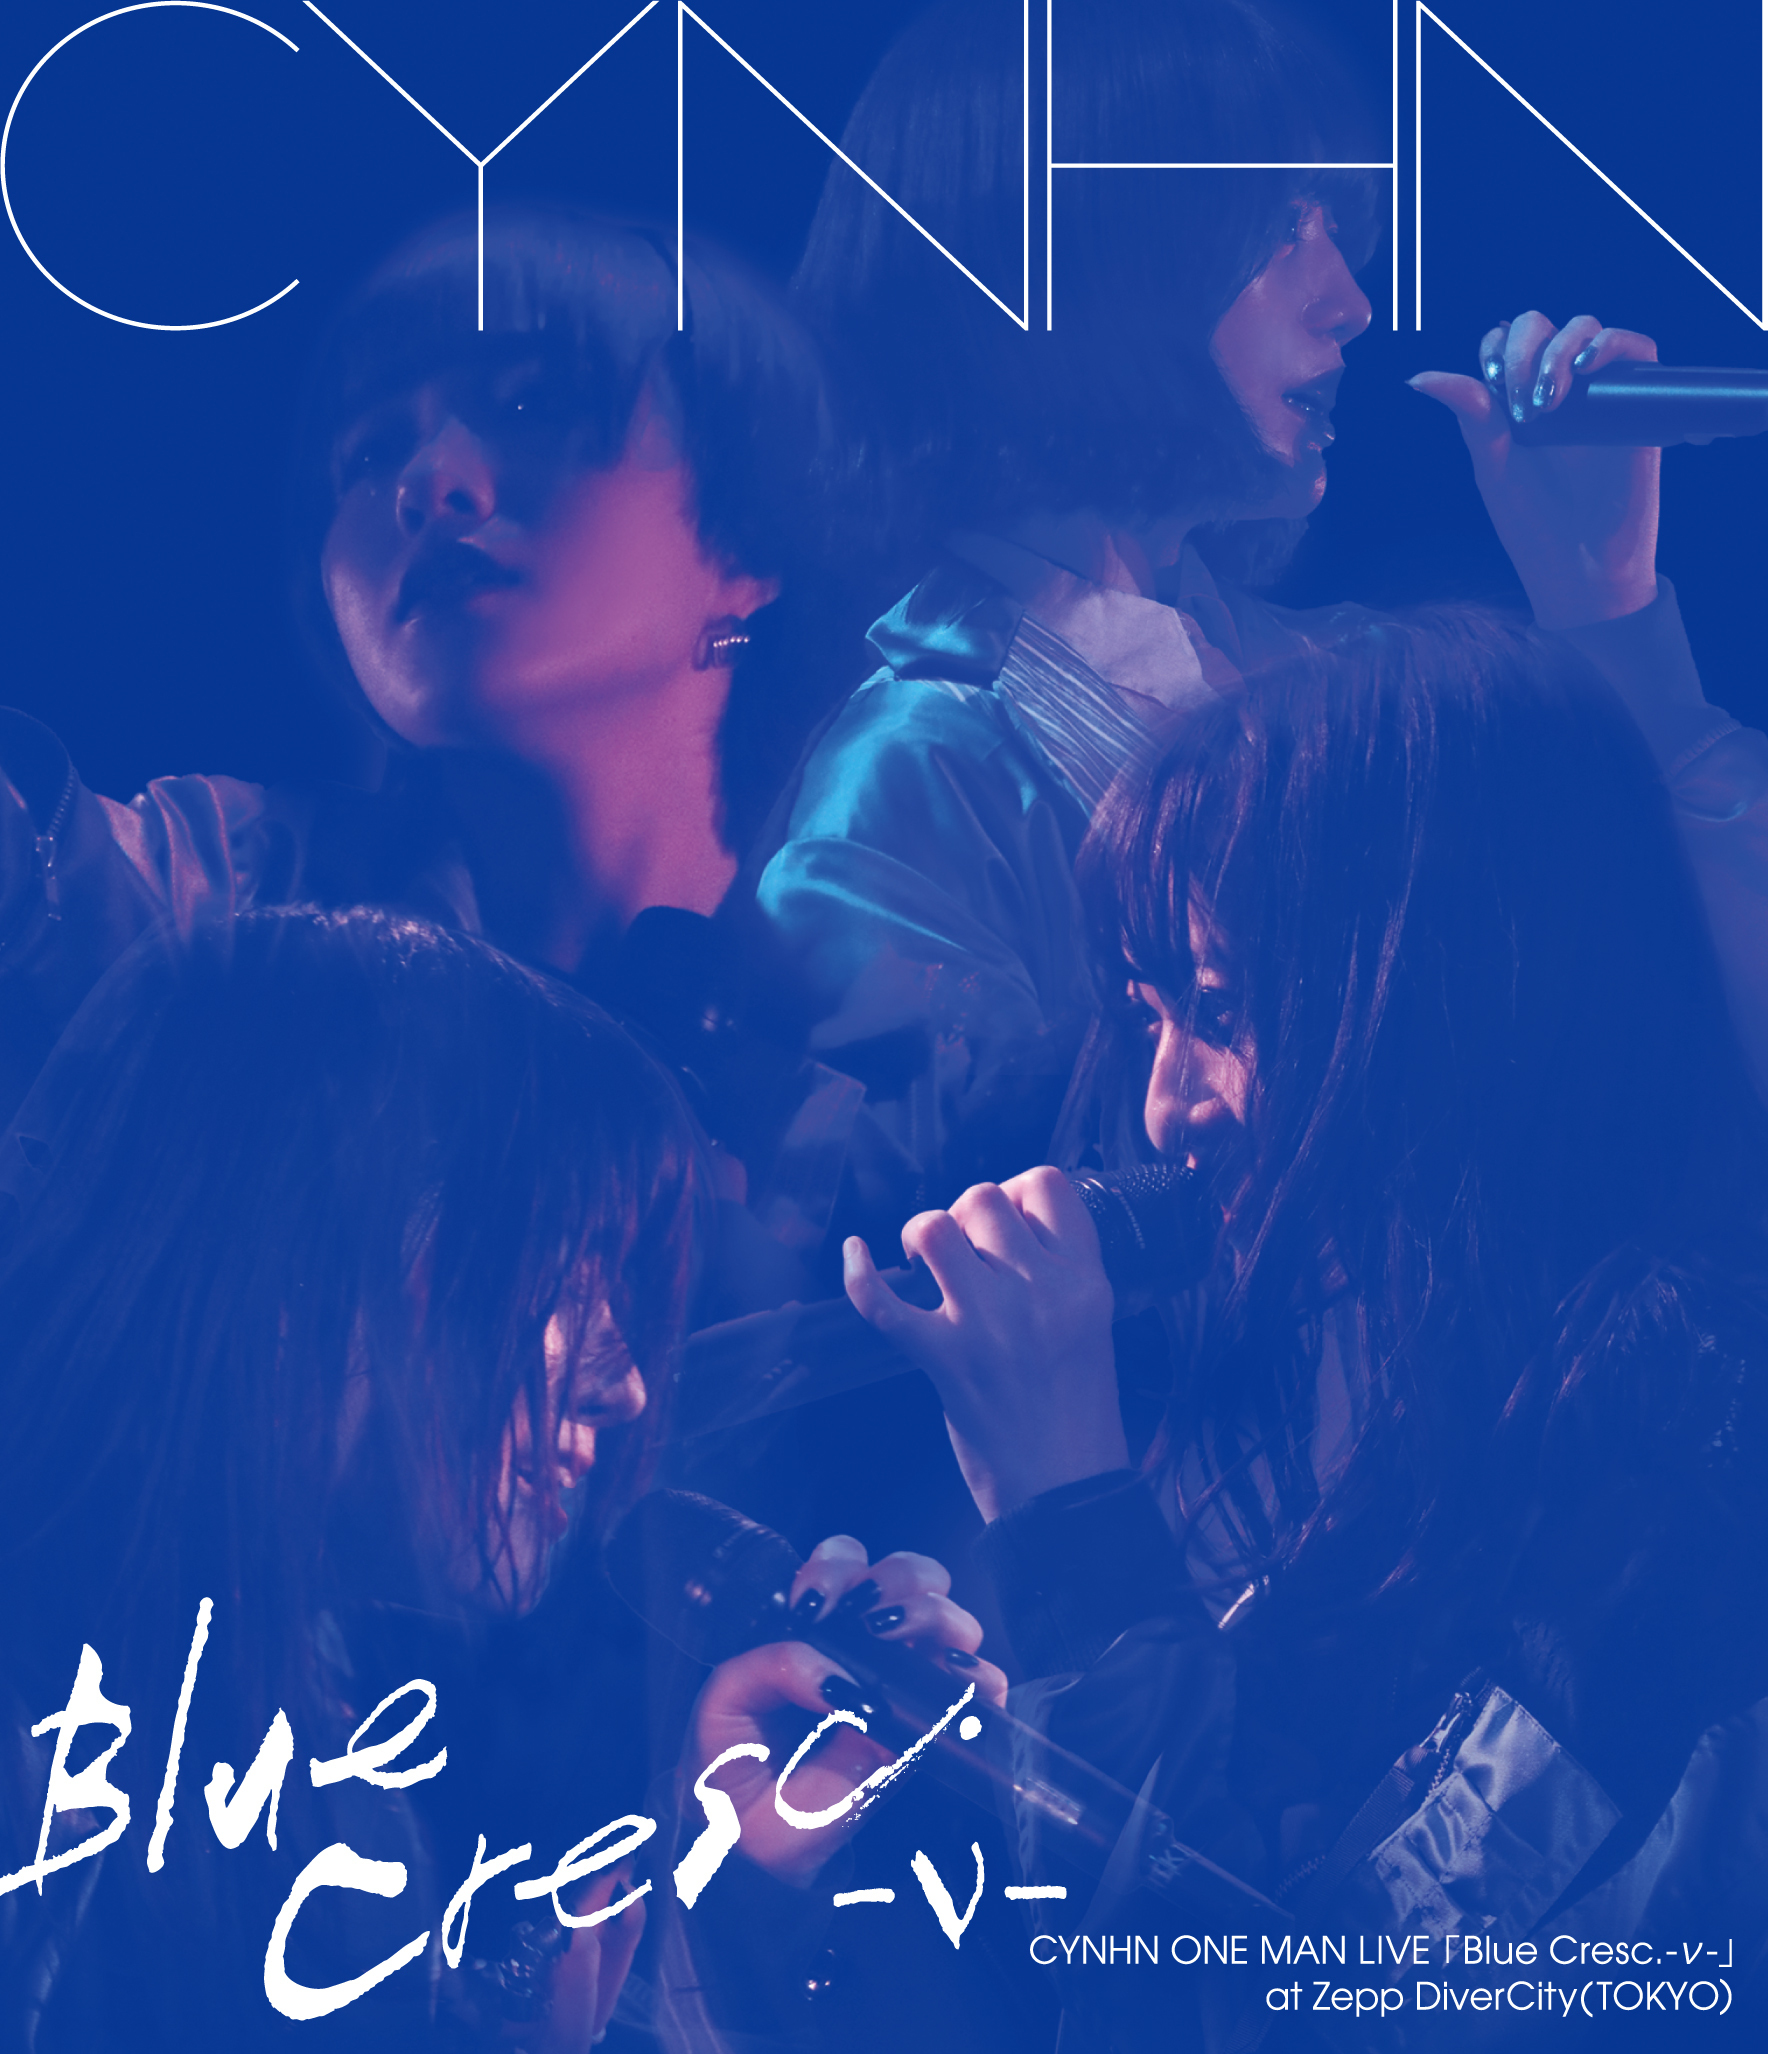 CYNHN ONE MAN LIVE 「Blue Cresc.-ν-」 at Zepp DiverCity